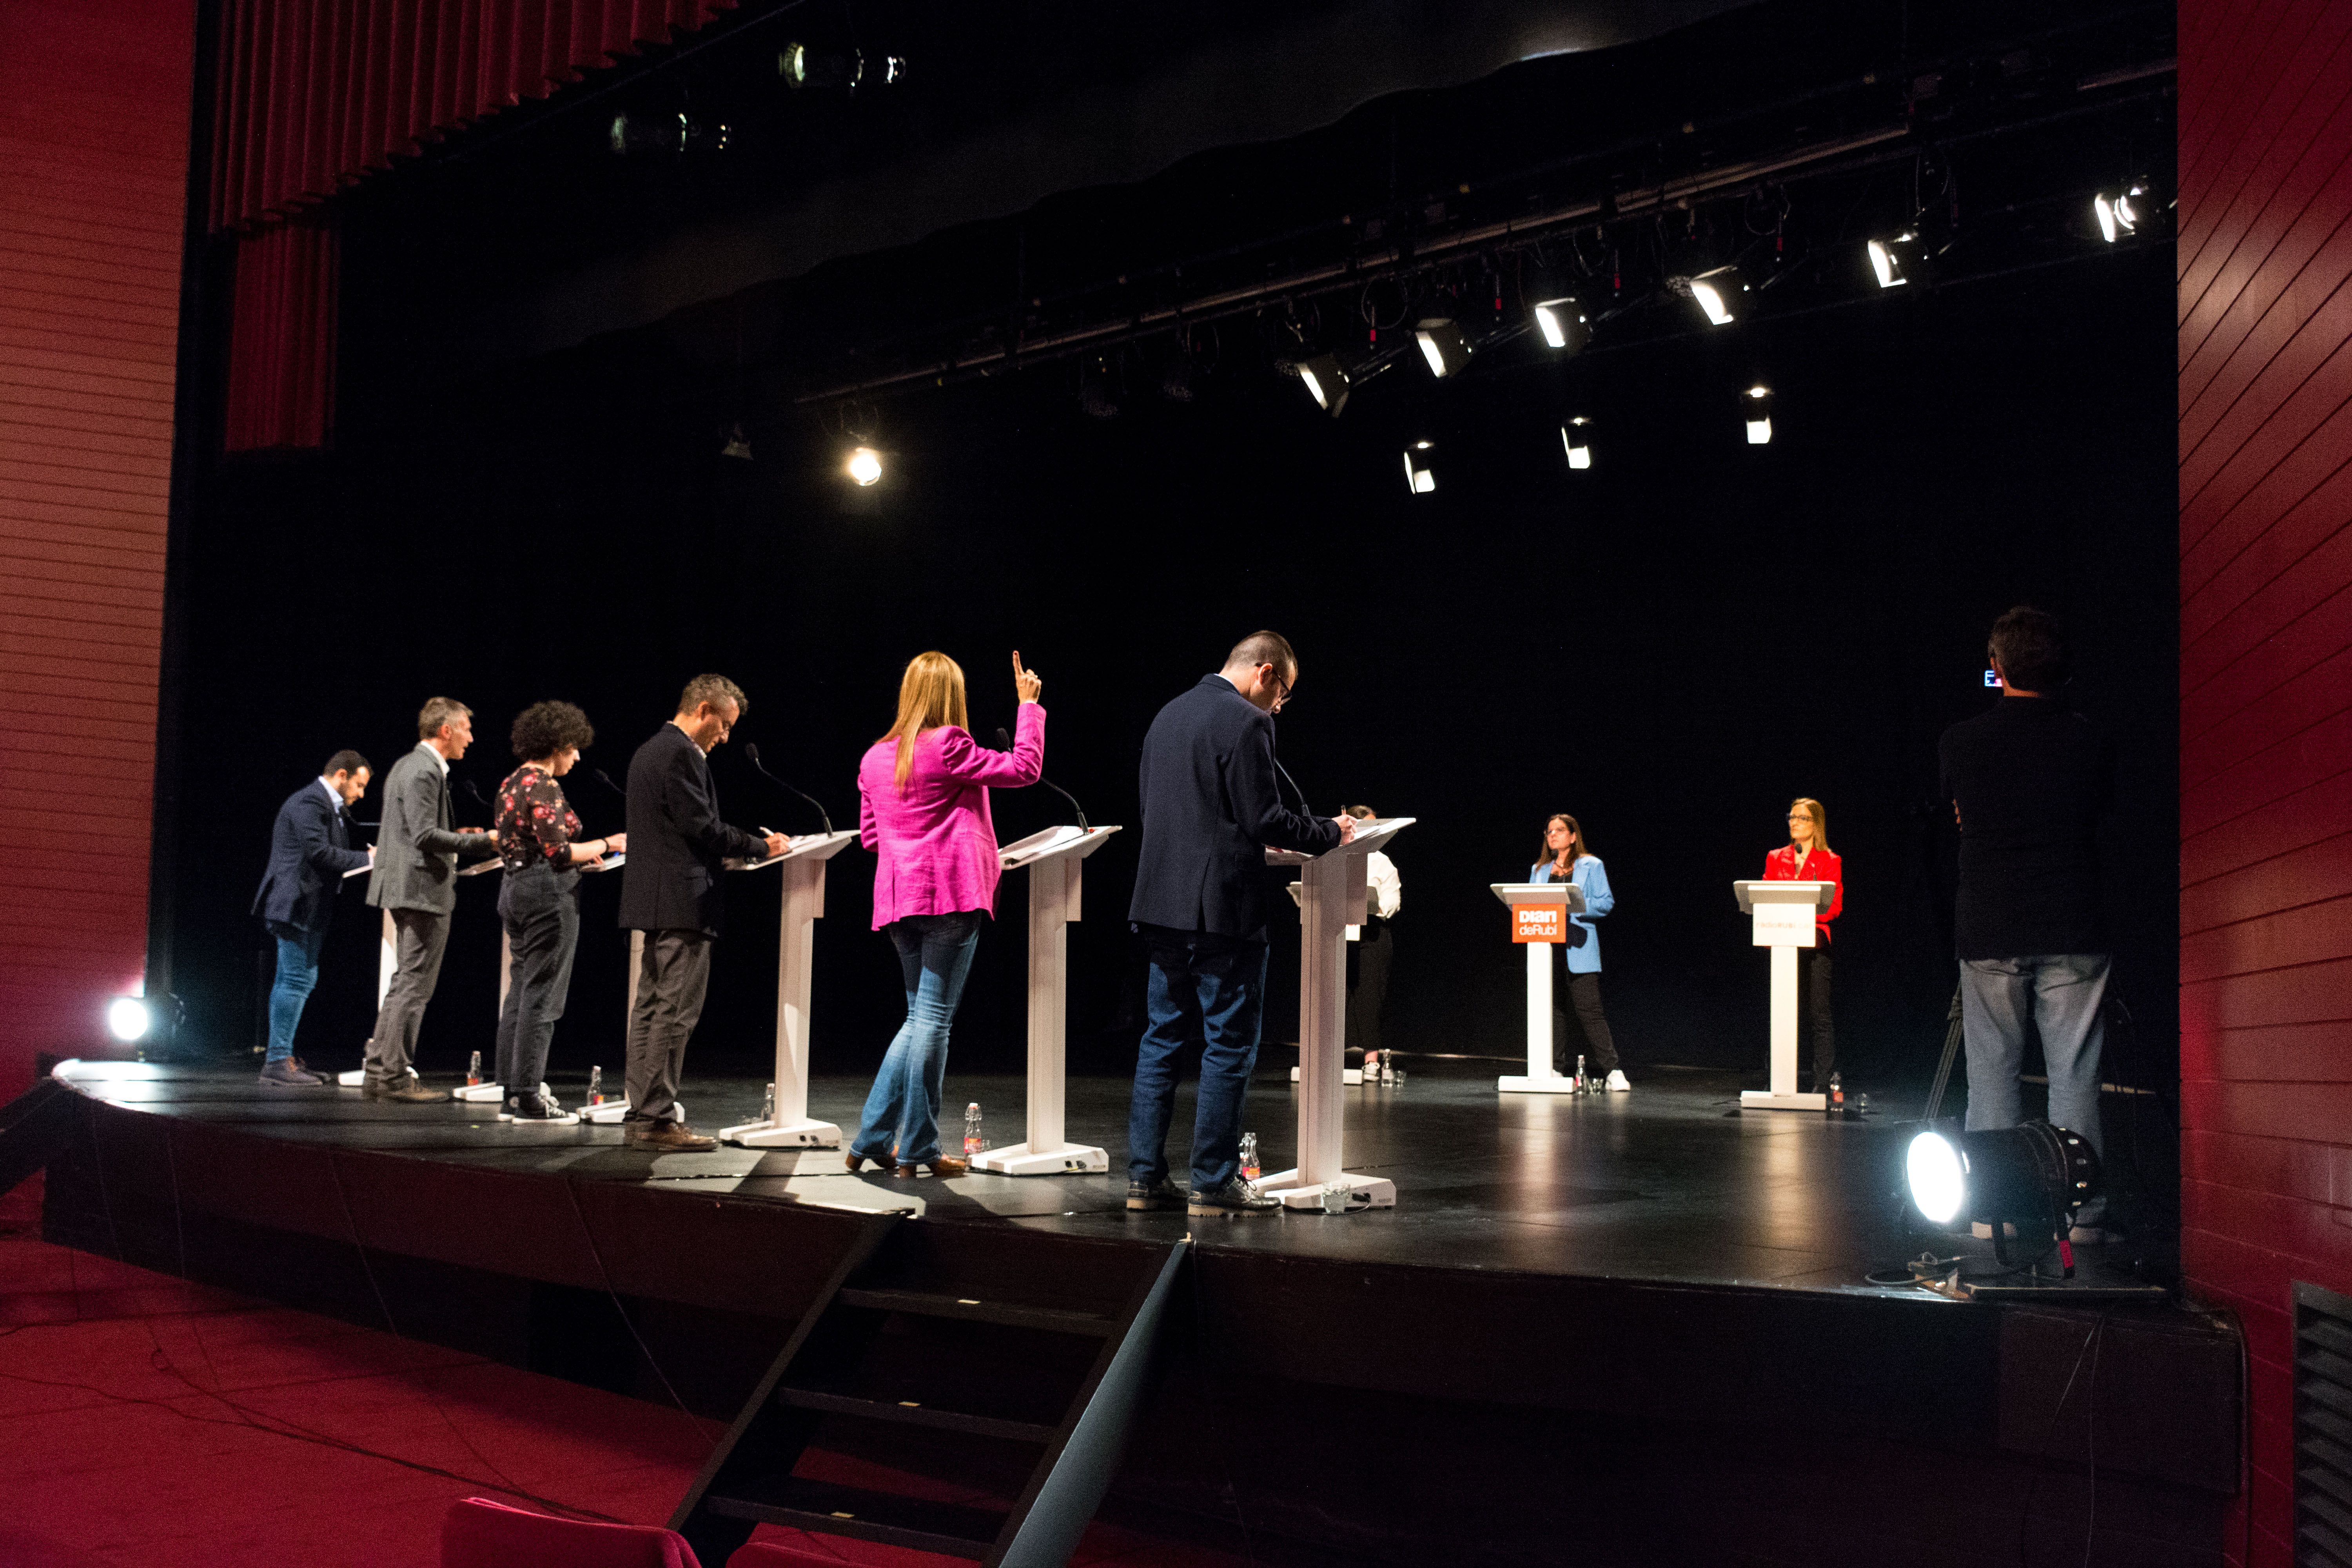 Debat electoral a Rubí 2023. FOTO: Carmelo Jiménez